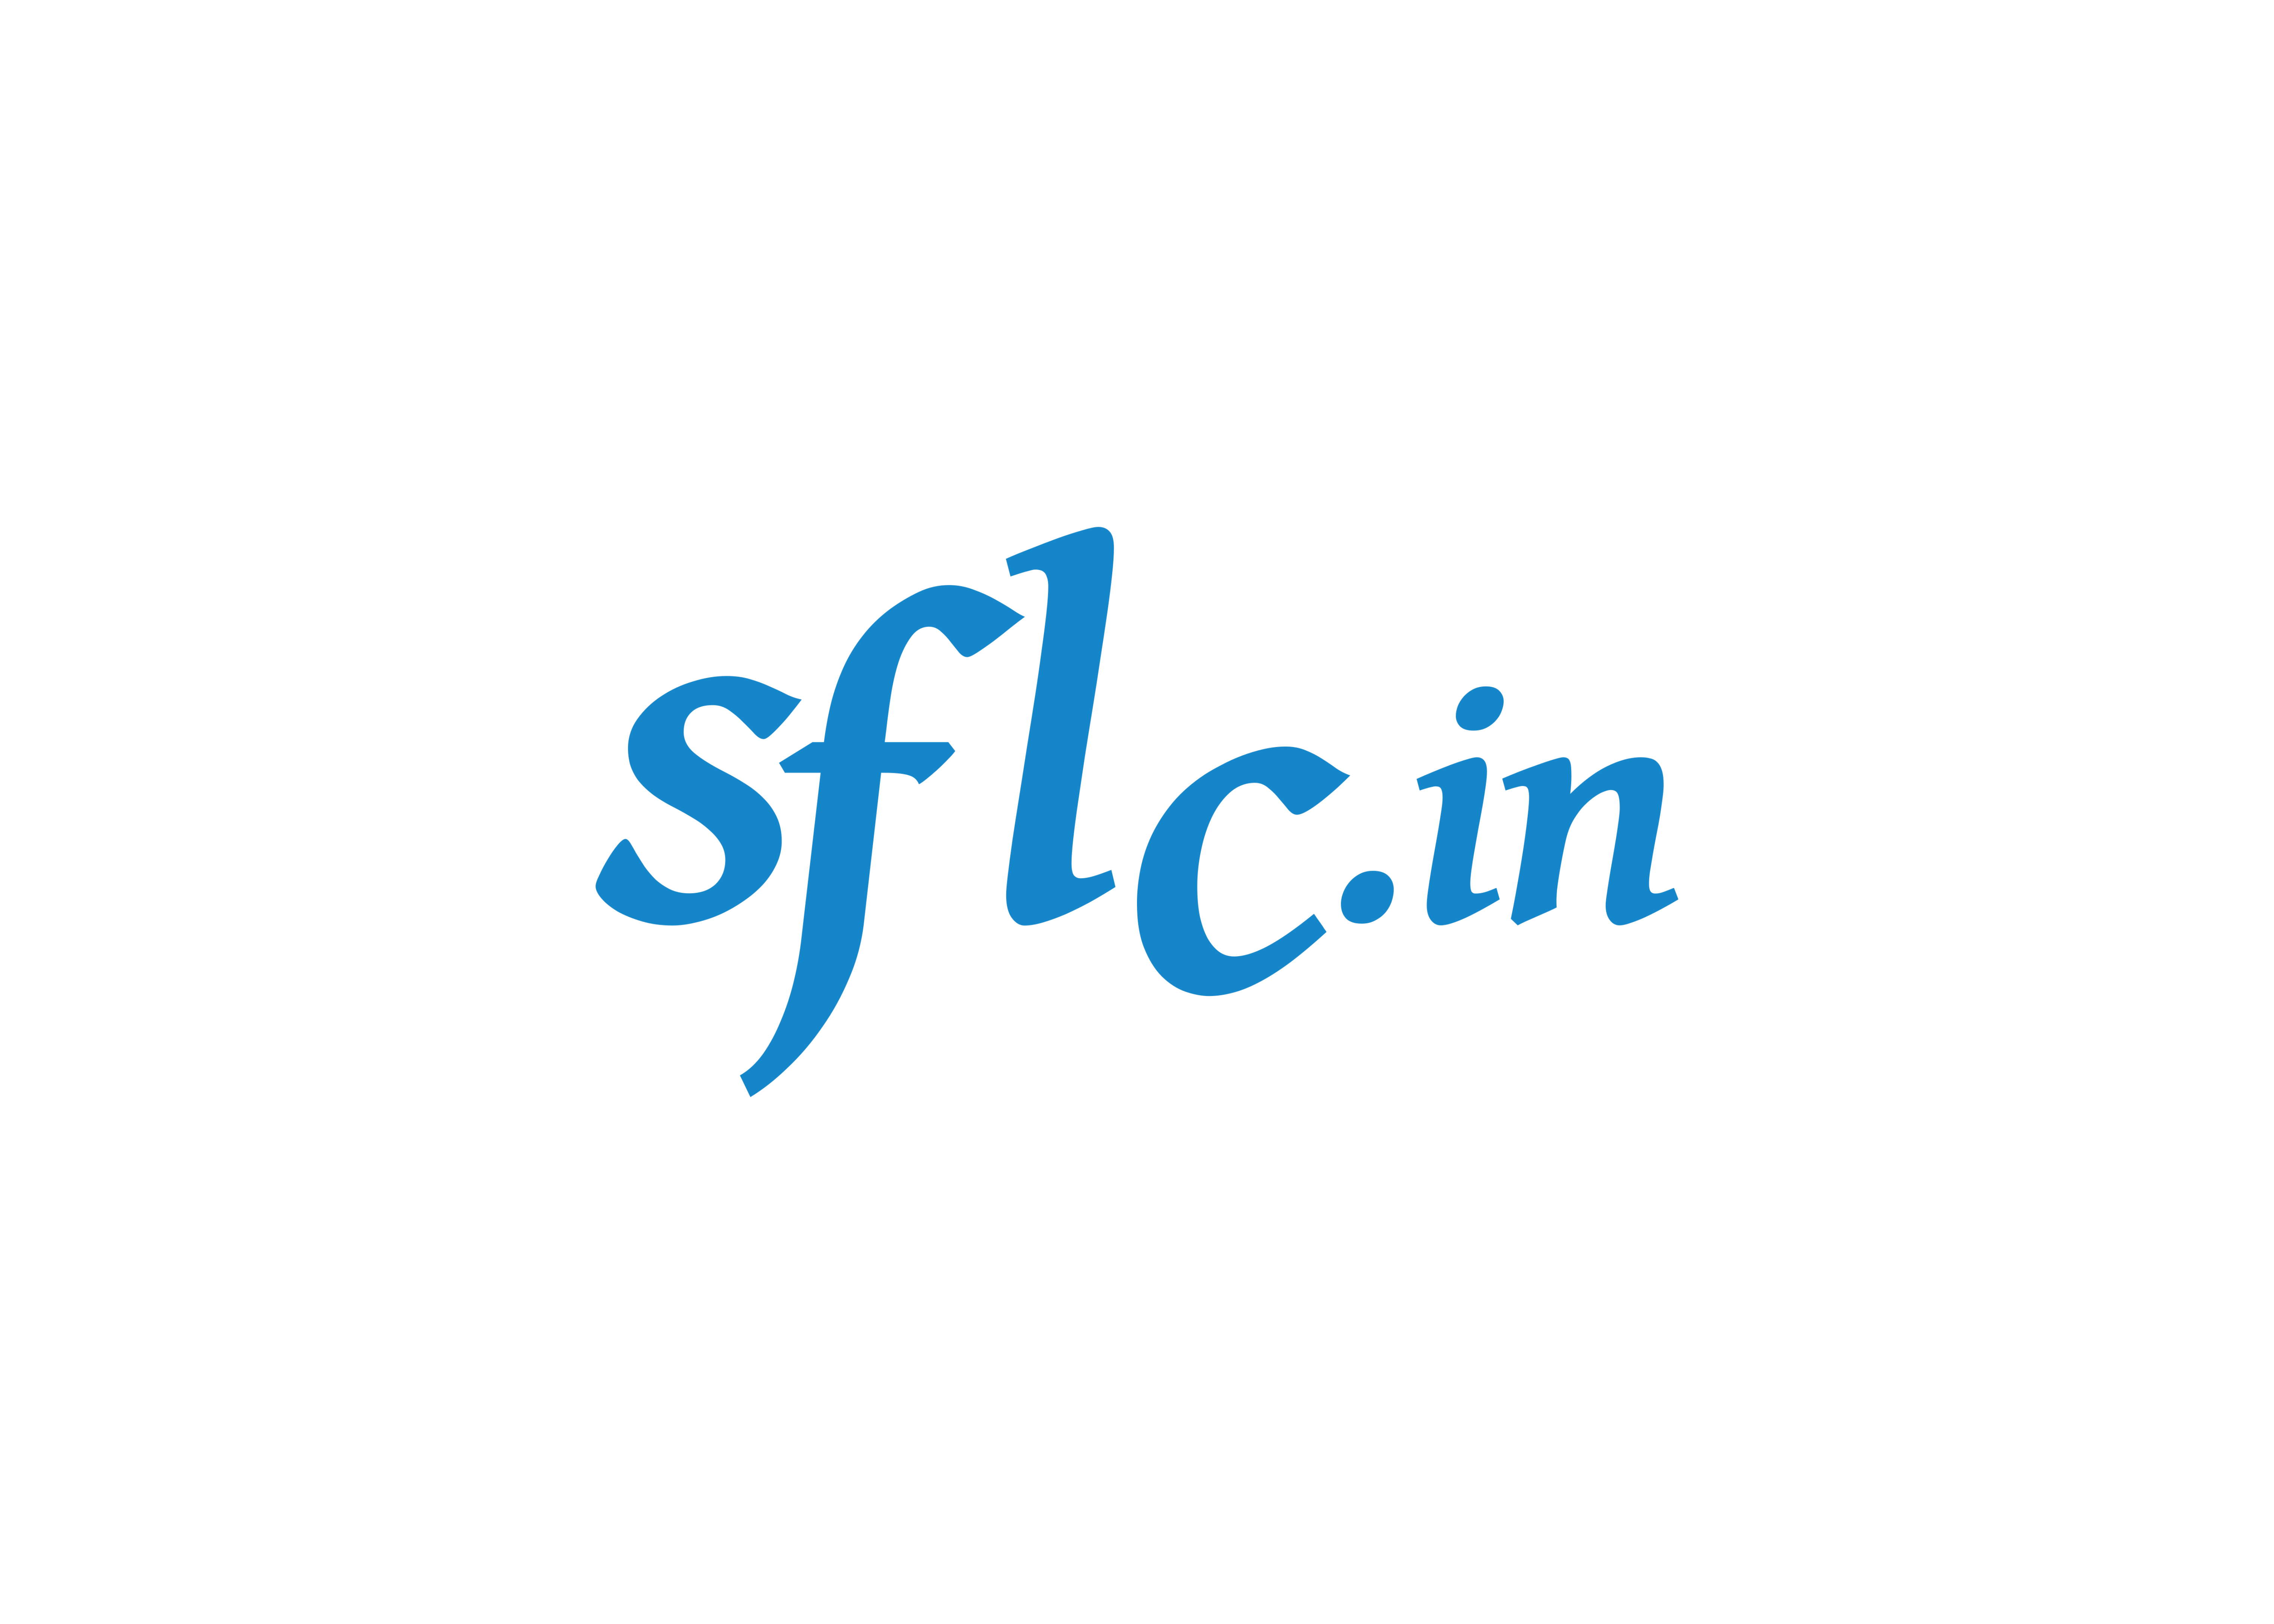 SFLC.in Shortlised for 2019 Index on Censorship Freedom of Expression Awards